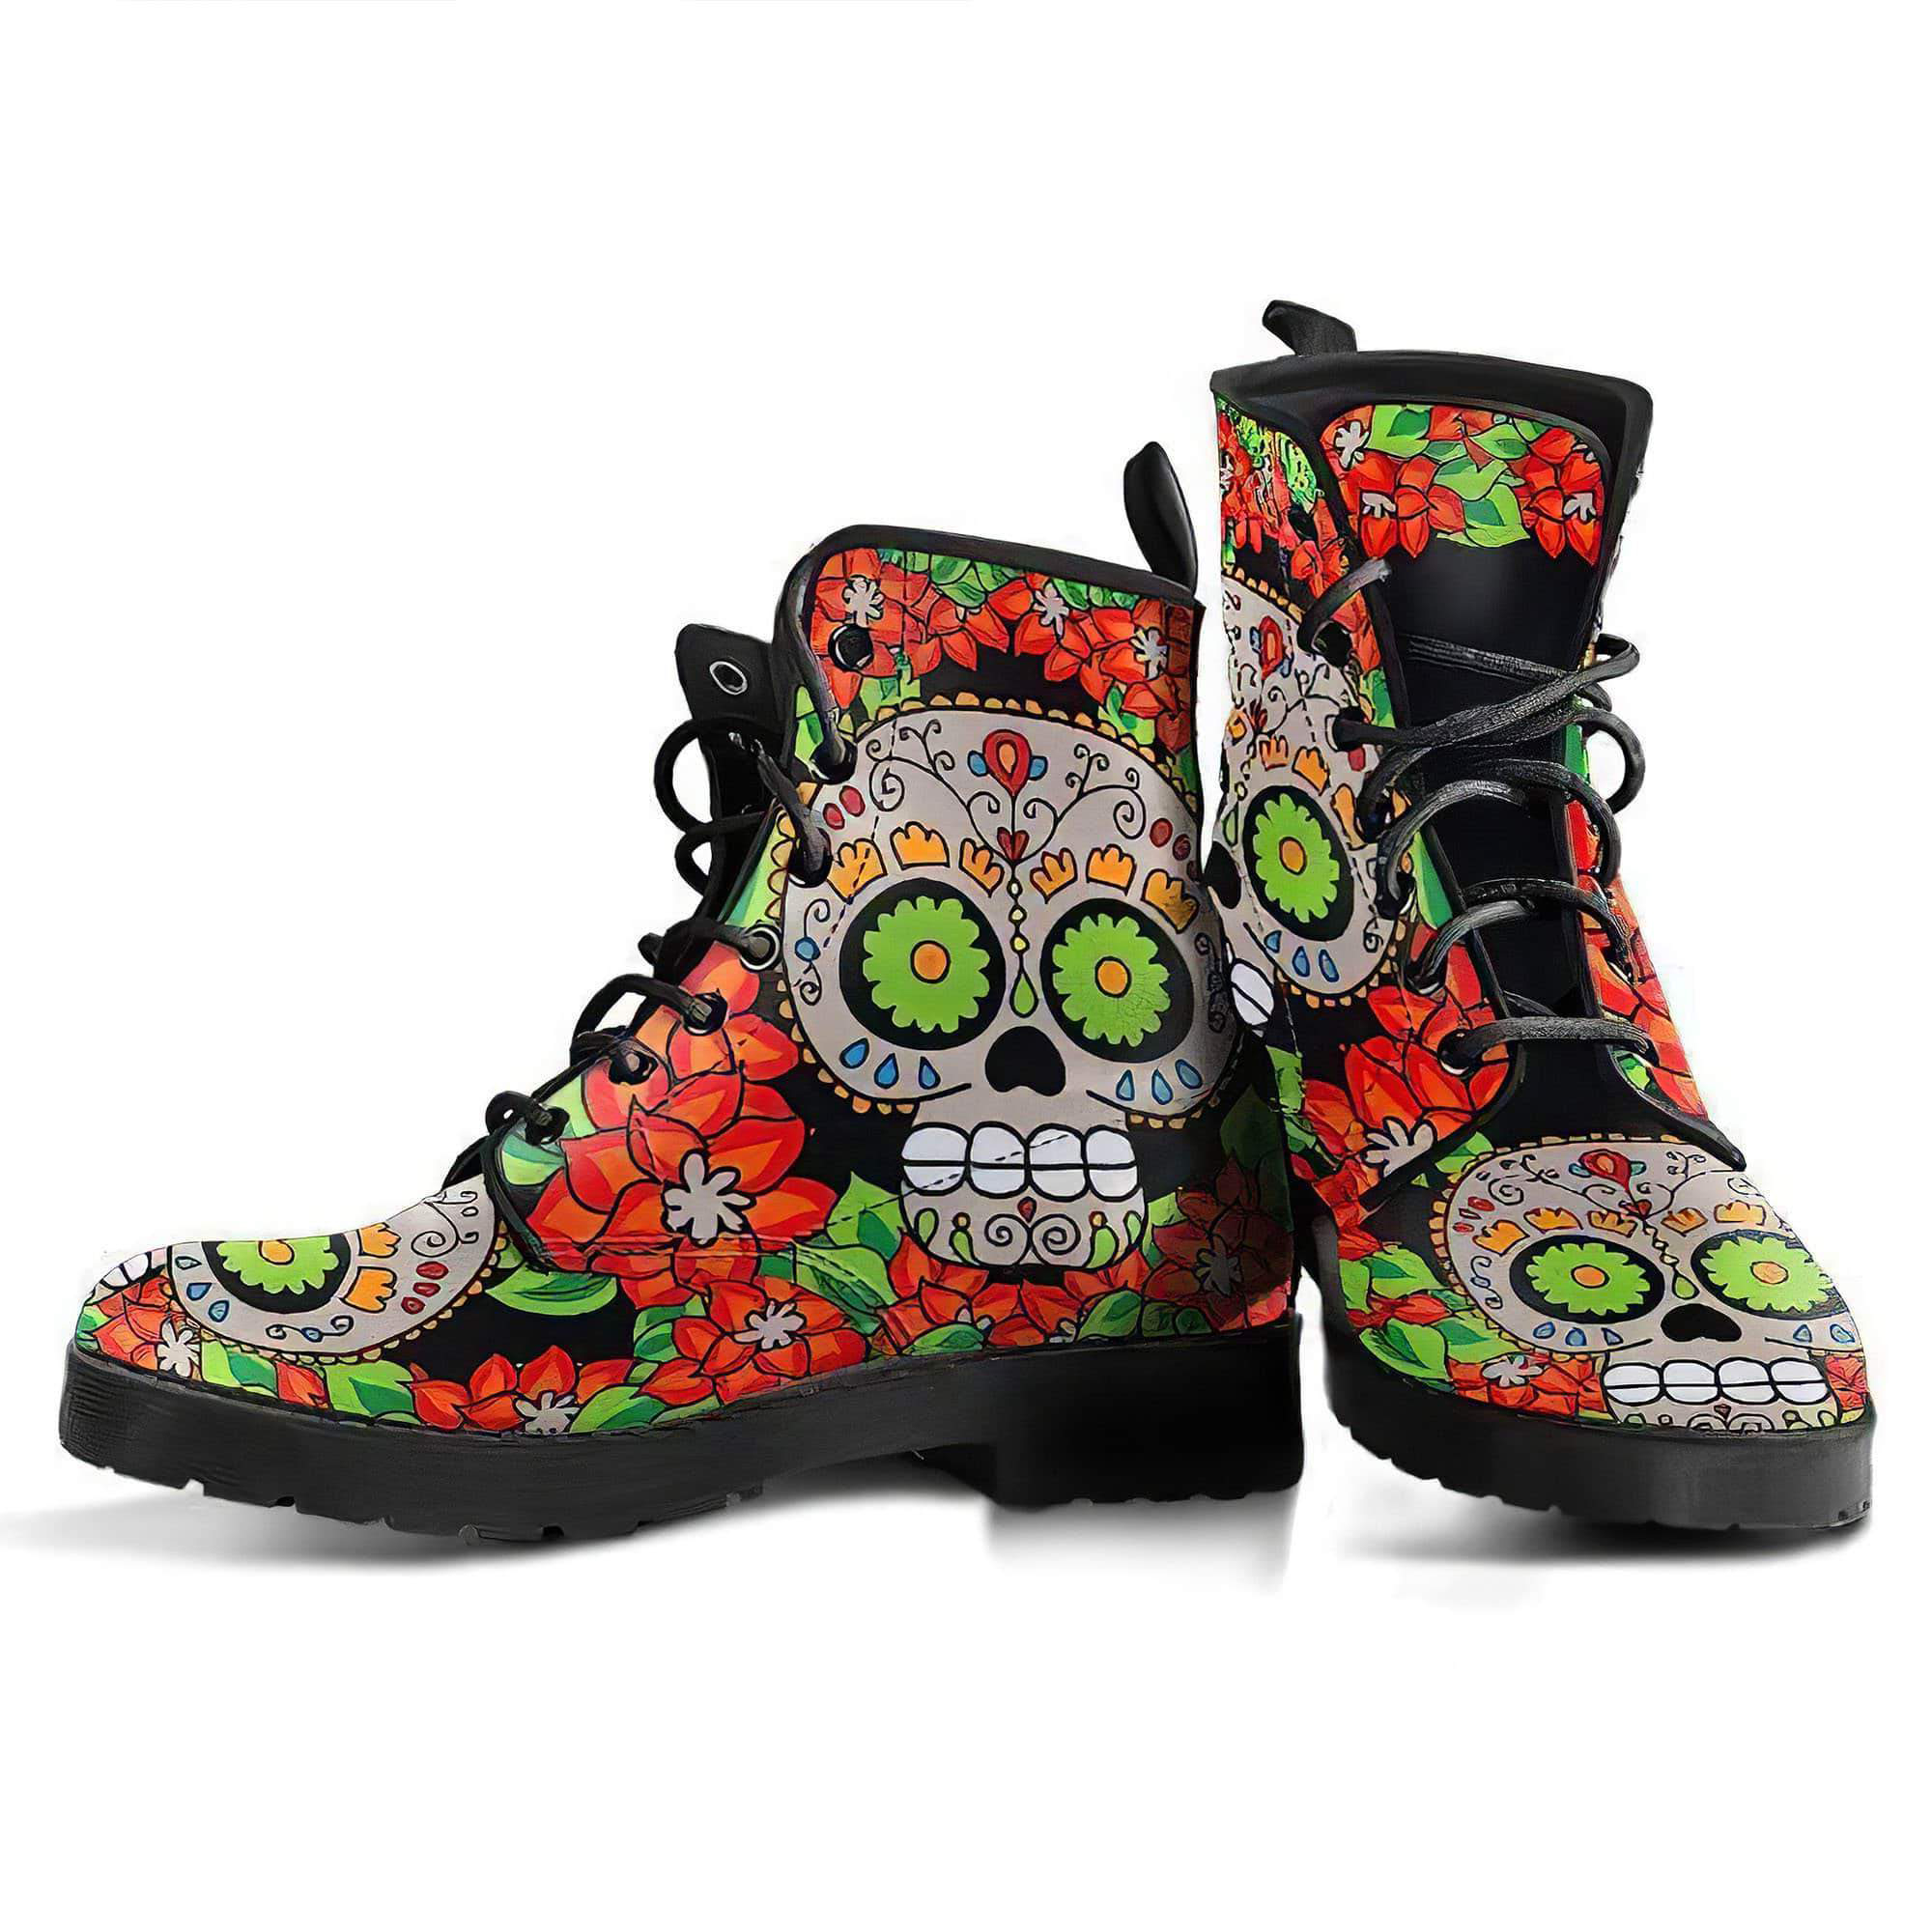 sugarskull-5-women-s-boots-vegan-friendly-leather-women-s-leather-boots-12051954040893.jpg